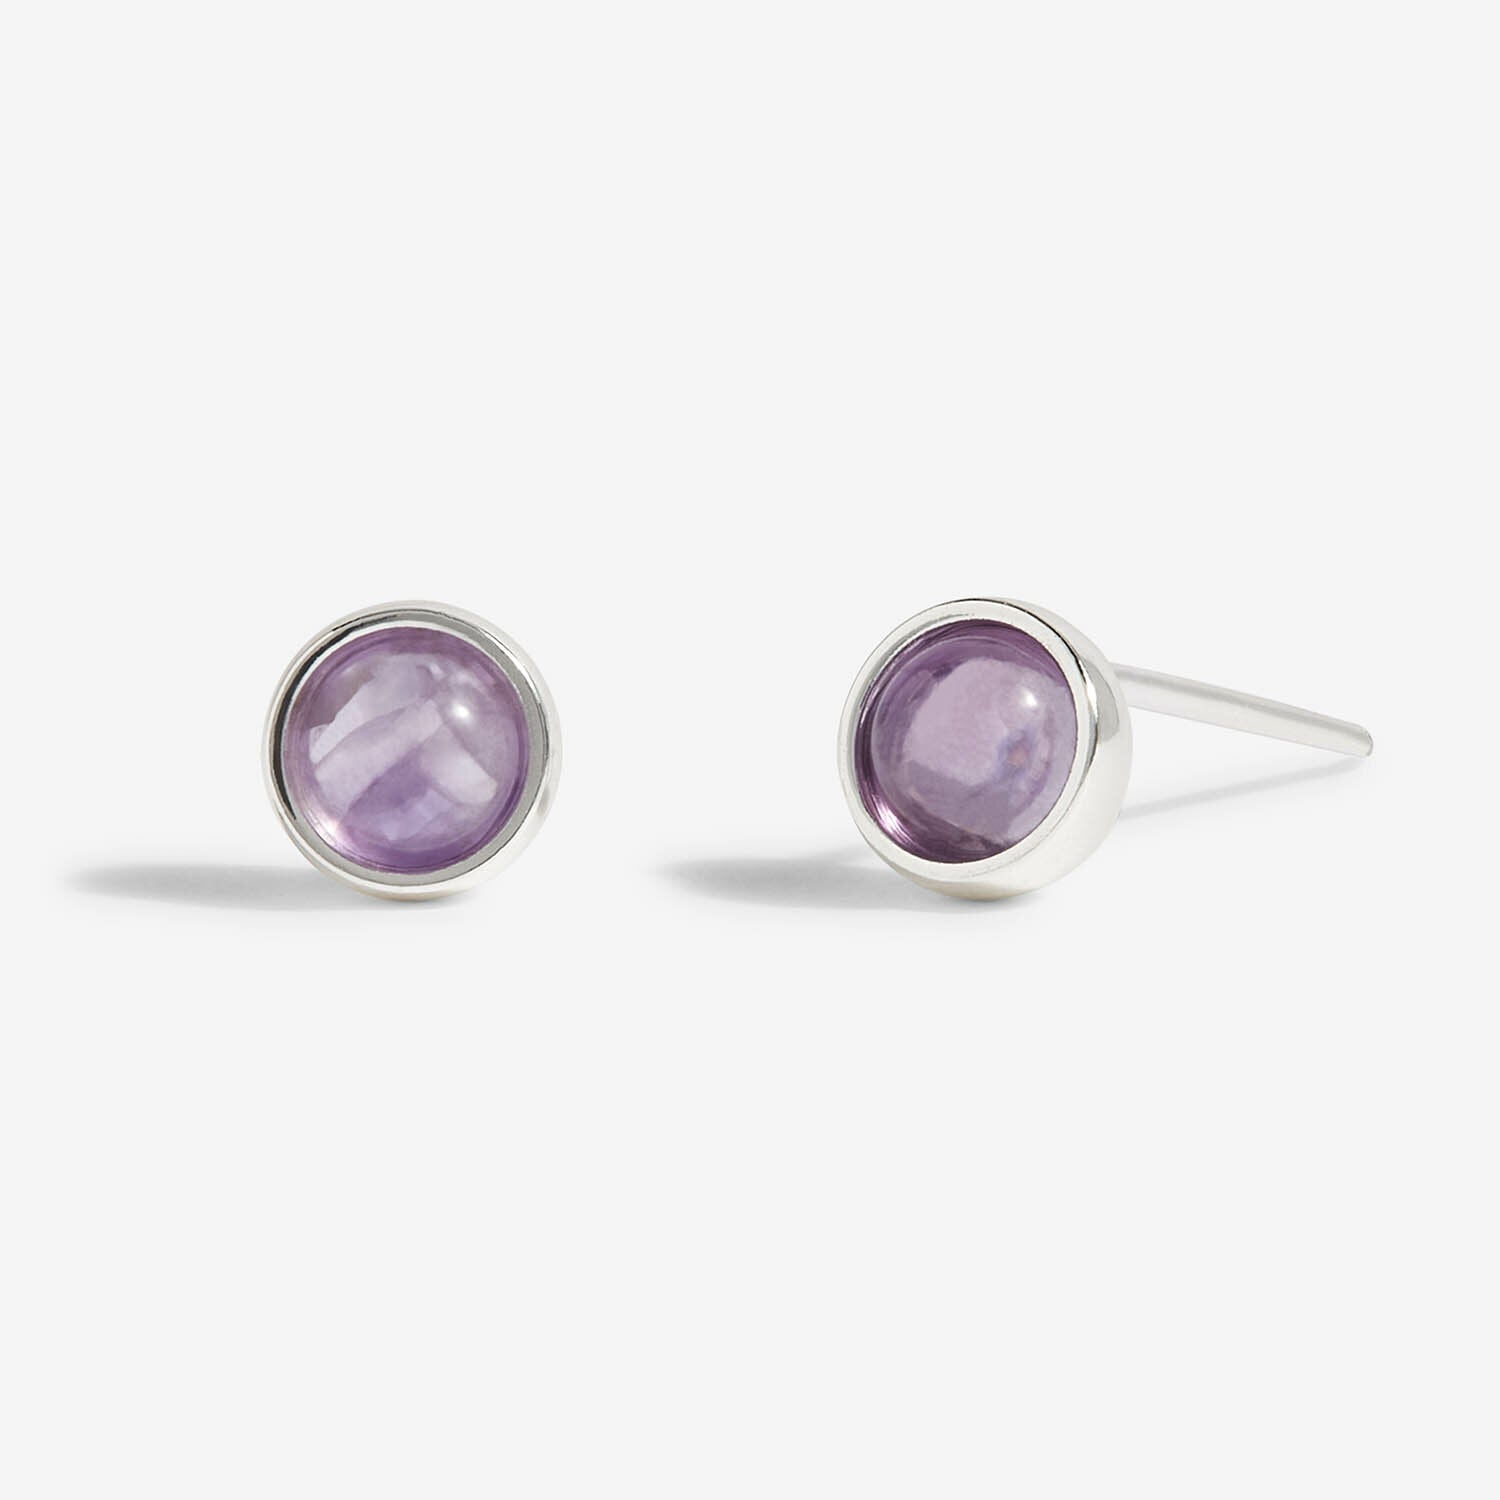 Joma Jewellery - Birthstone Earrings - February - Amethyst